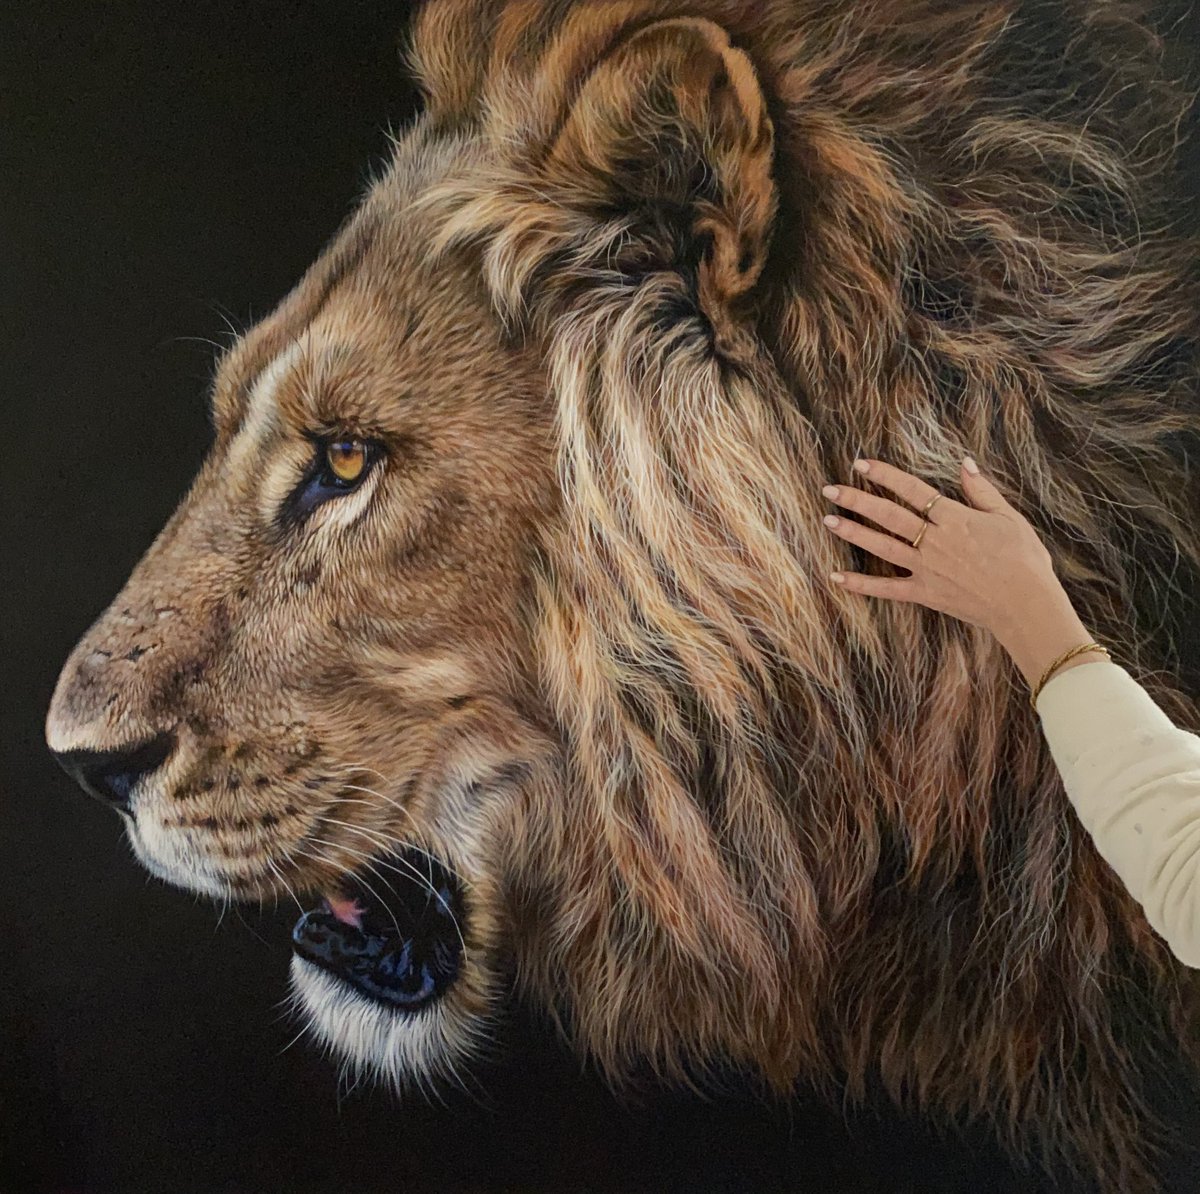 Putting the last finishing touches to my latest male lion acrylic painting….hope you like him 🦁

(Sold)

julierhodes.com

#africanlion #lionart #bigcatart #wildlifepainter #realismartist #originalpaintings #artprocess #finishedart #artstudio #artcollectors